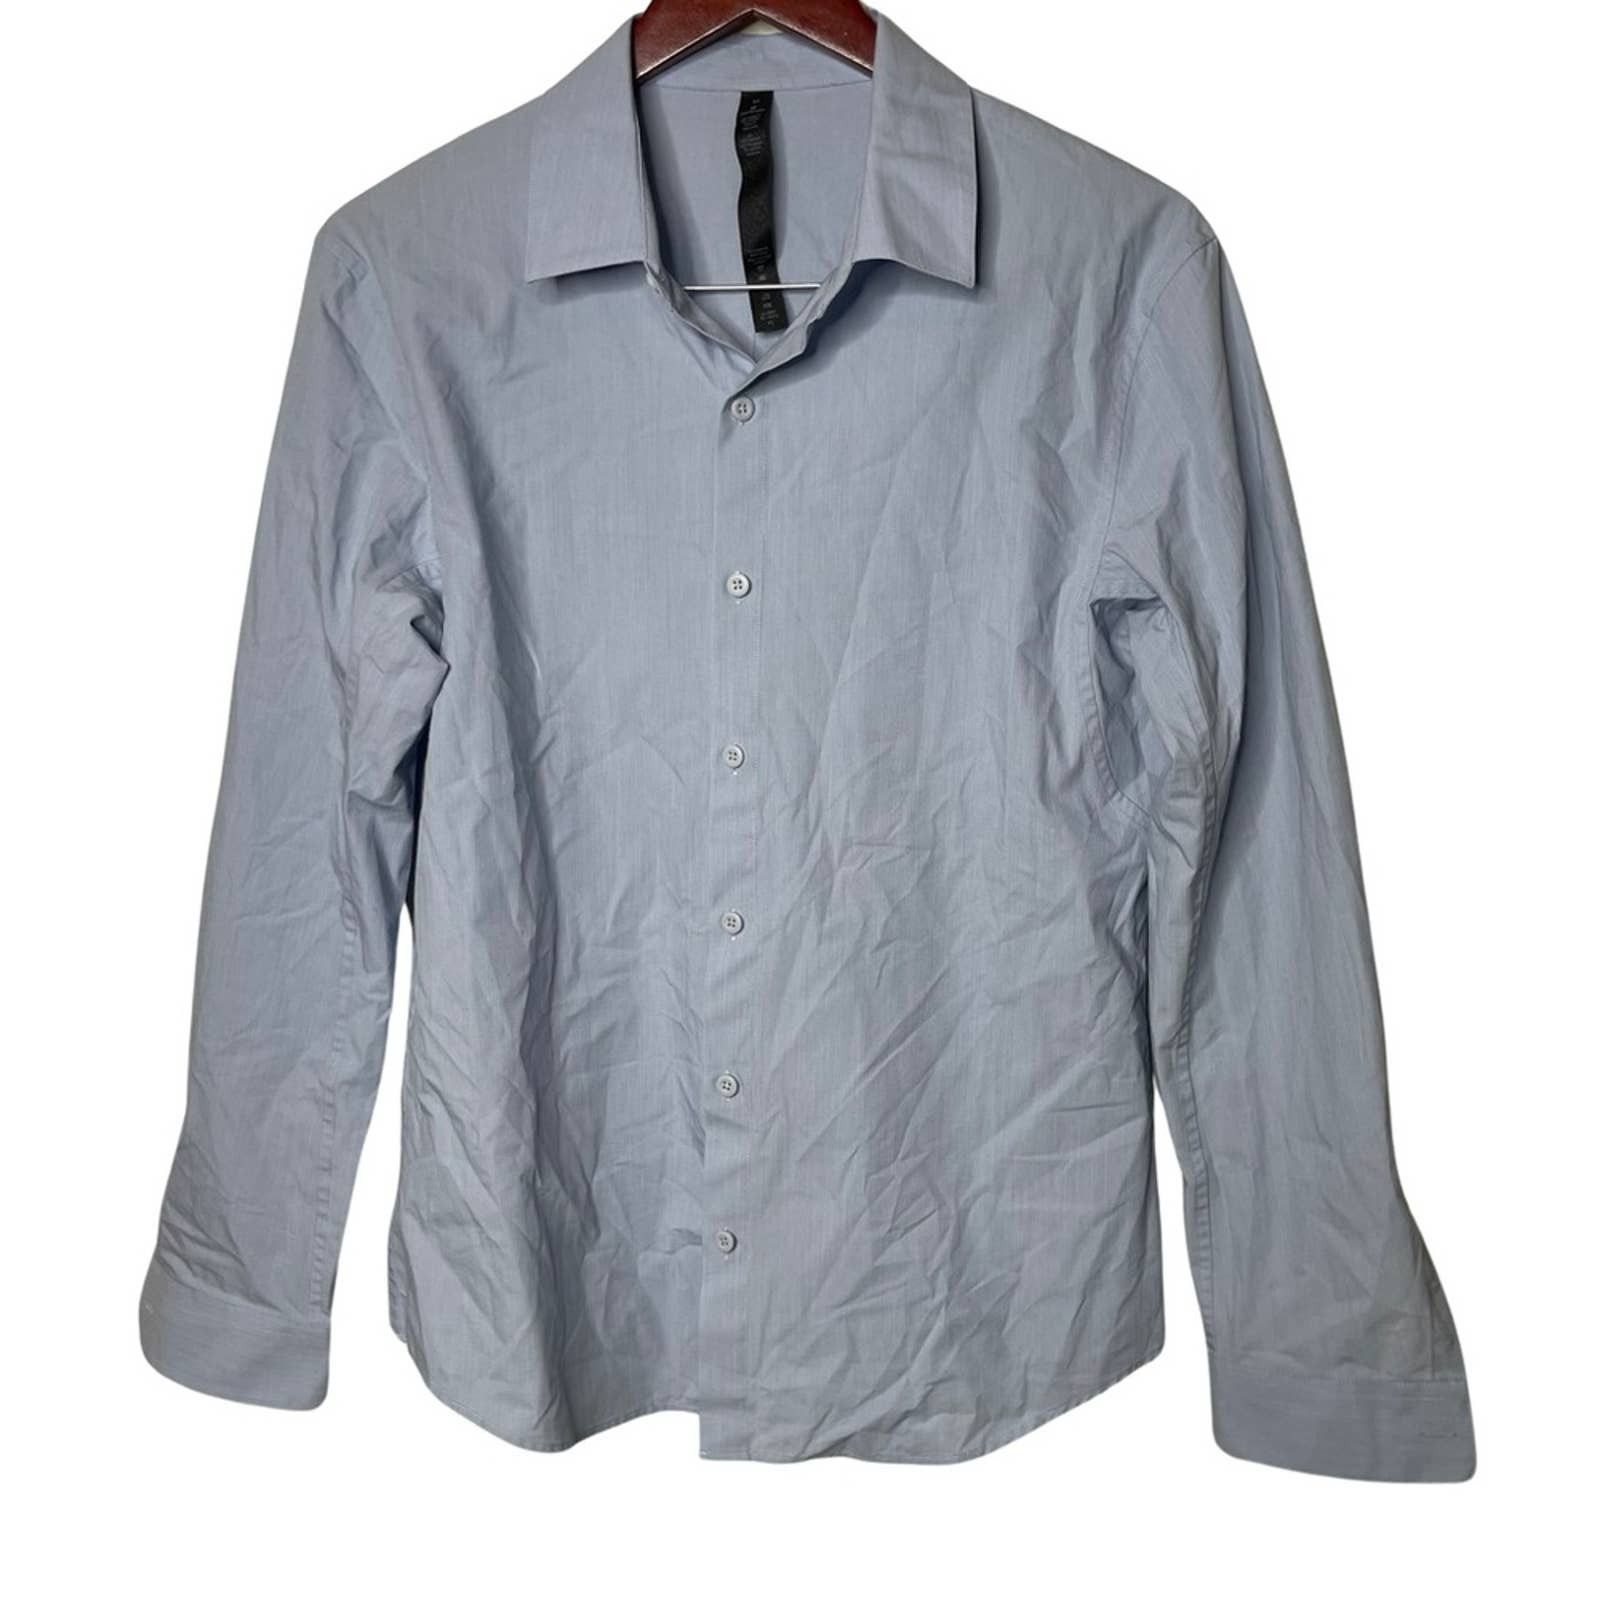 Lululemon New Venture Slim-Fit Long-Sleeve Shirt - Blue/Pastel - Size XXL Easy Care Fabric